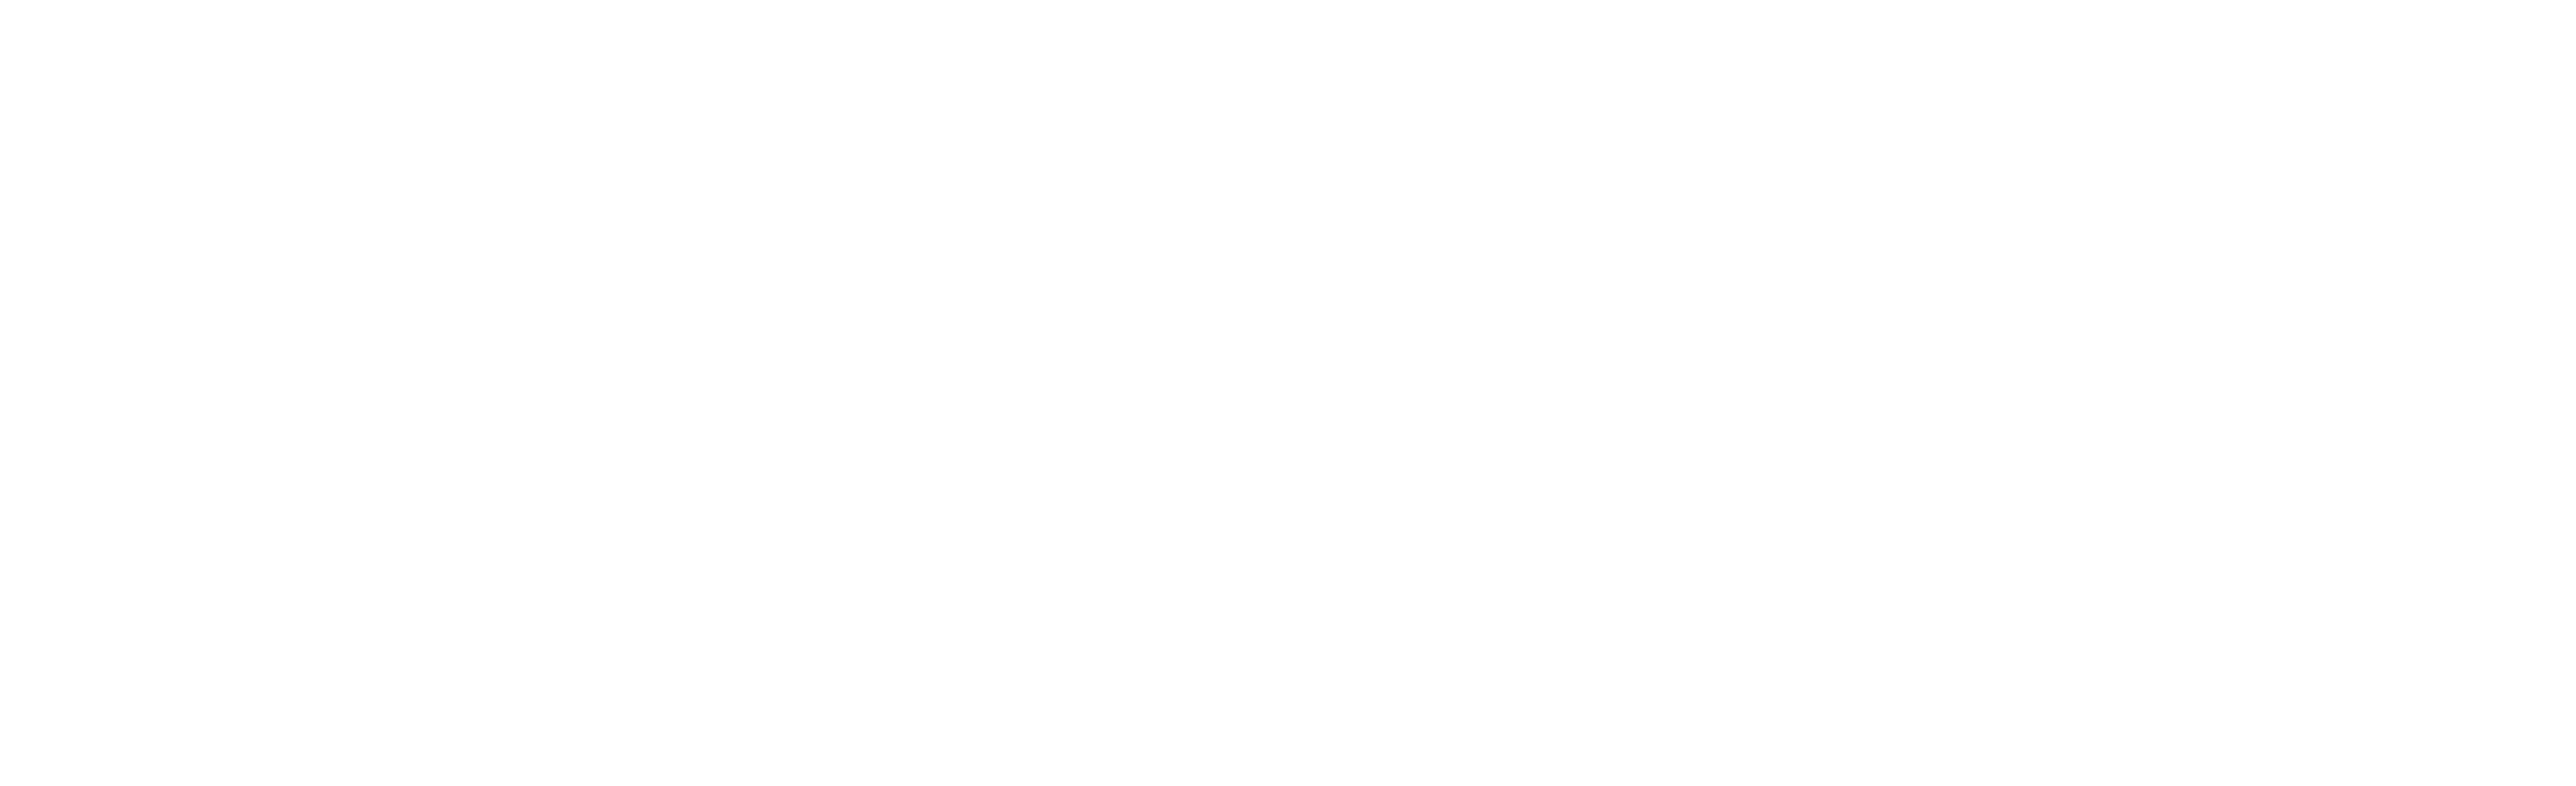 The Legend of Tarzan logo